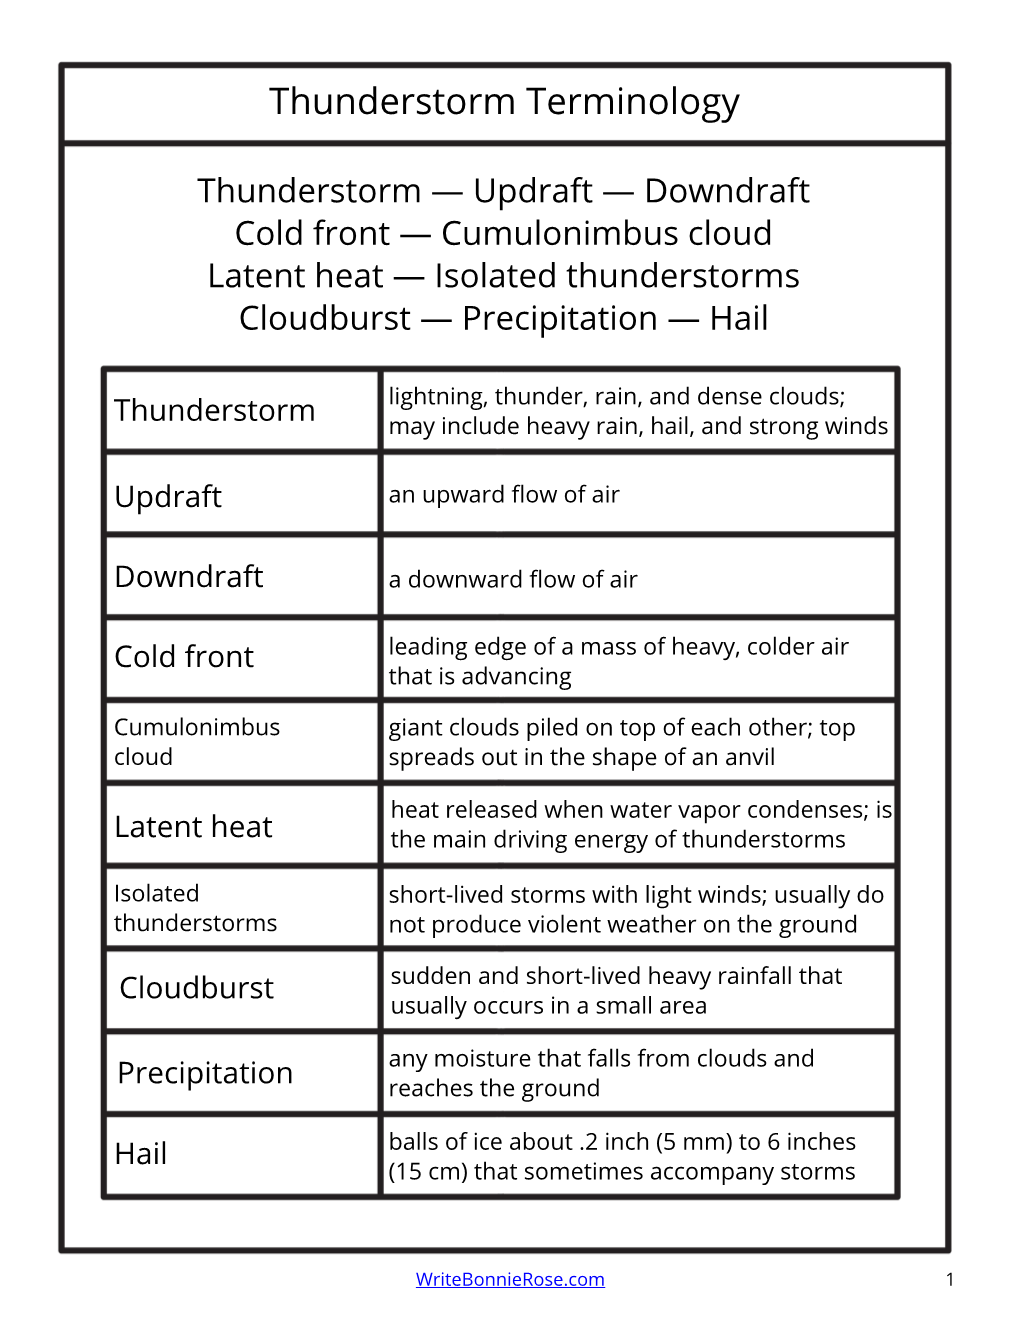 Thunderstorm Terminology